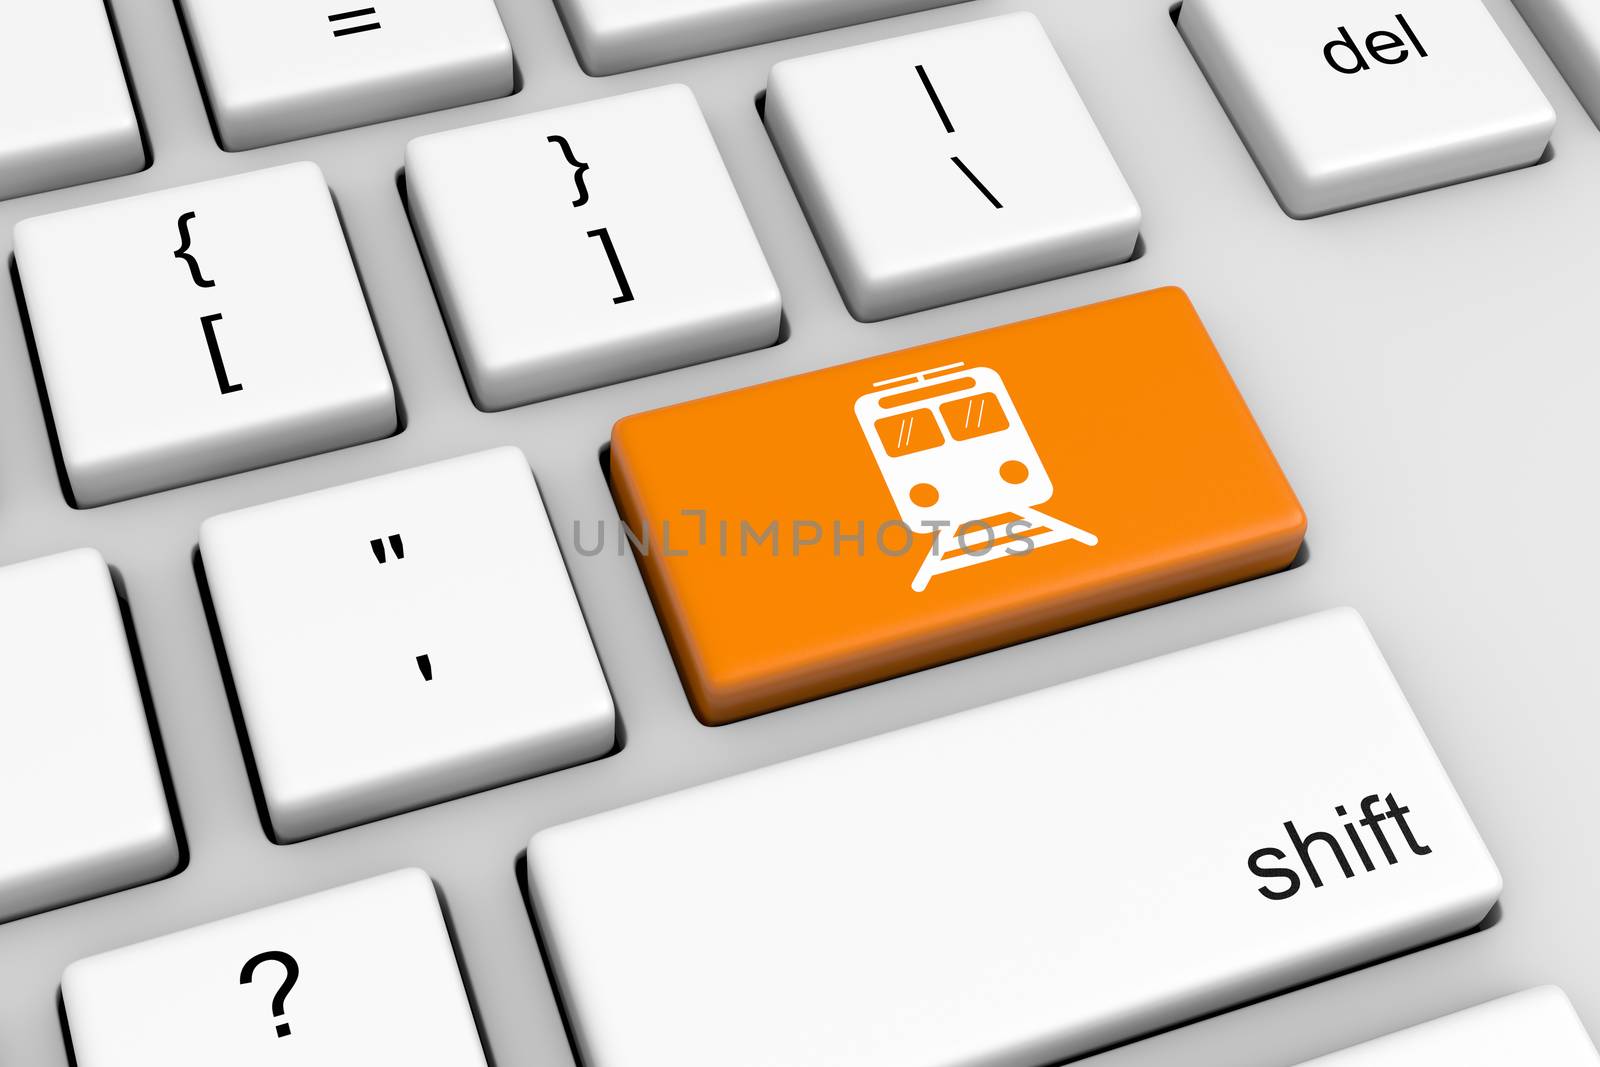 Computer Keyboard with Orange Train Button Illustration